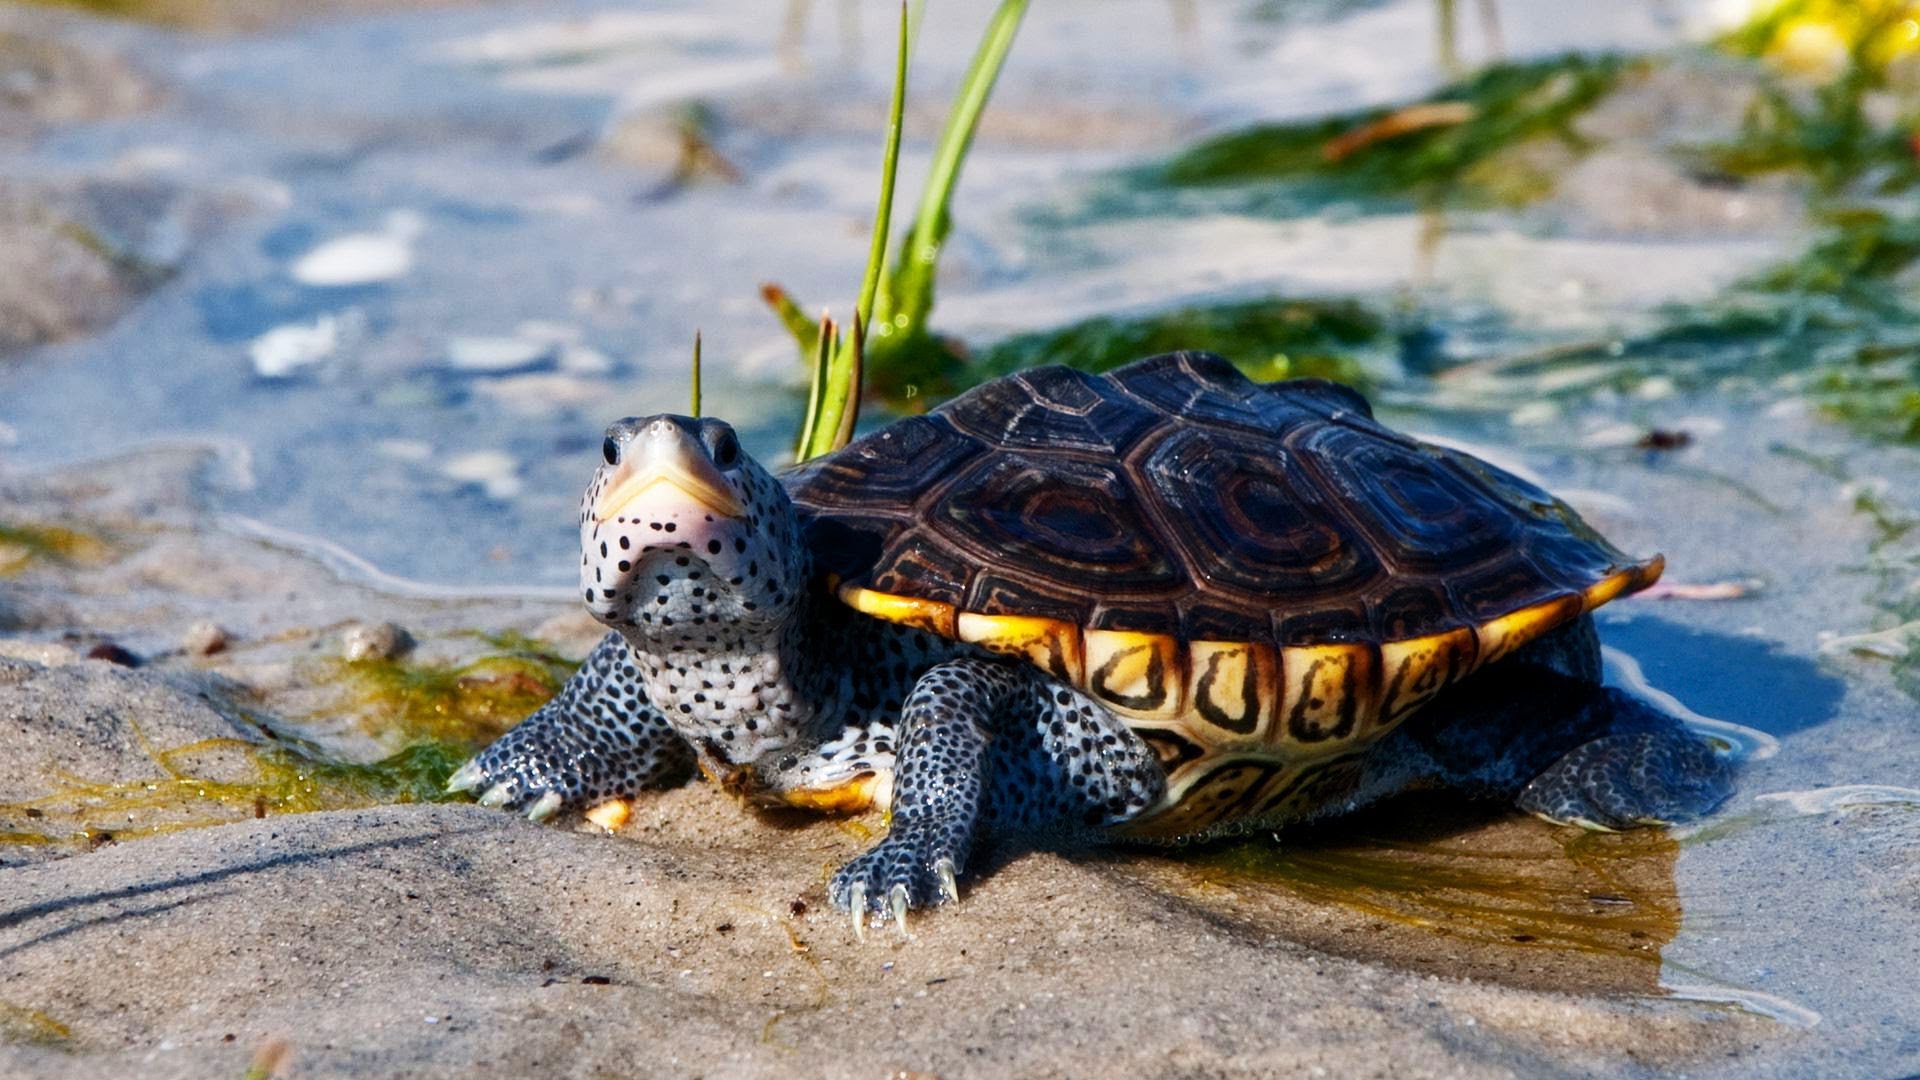 What's a Diamondback Terrapin Turtle? | Pet Turtles - YouTube